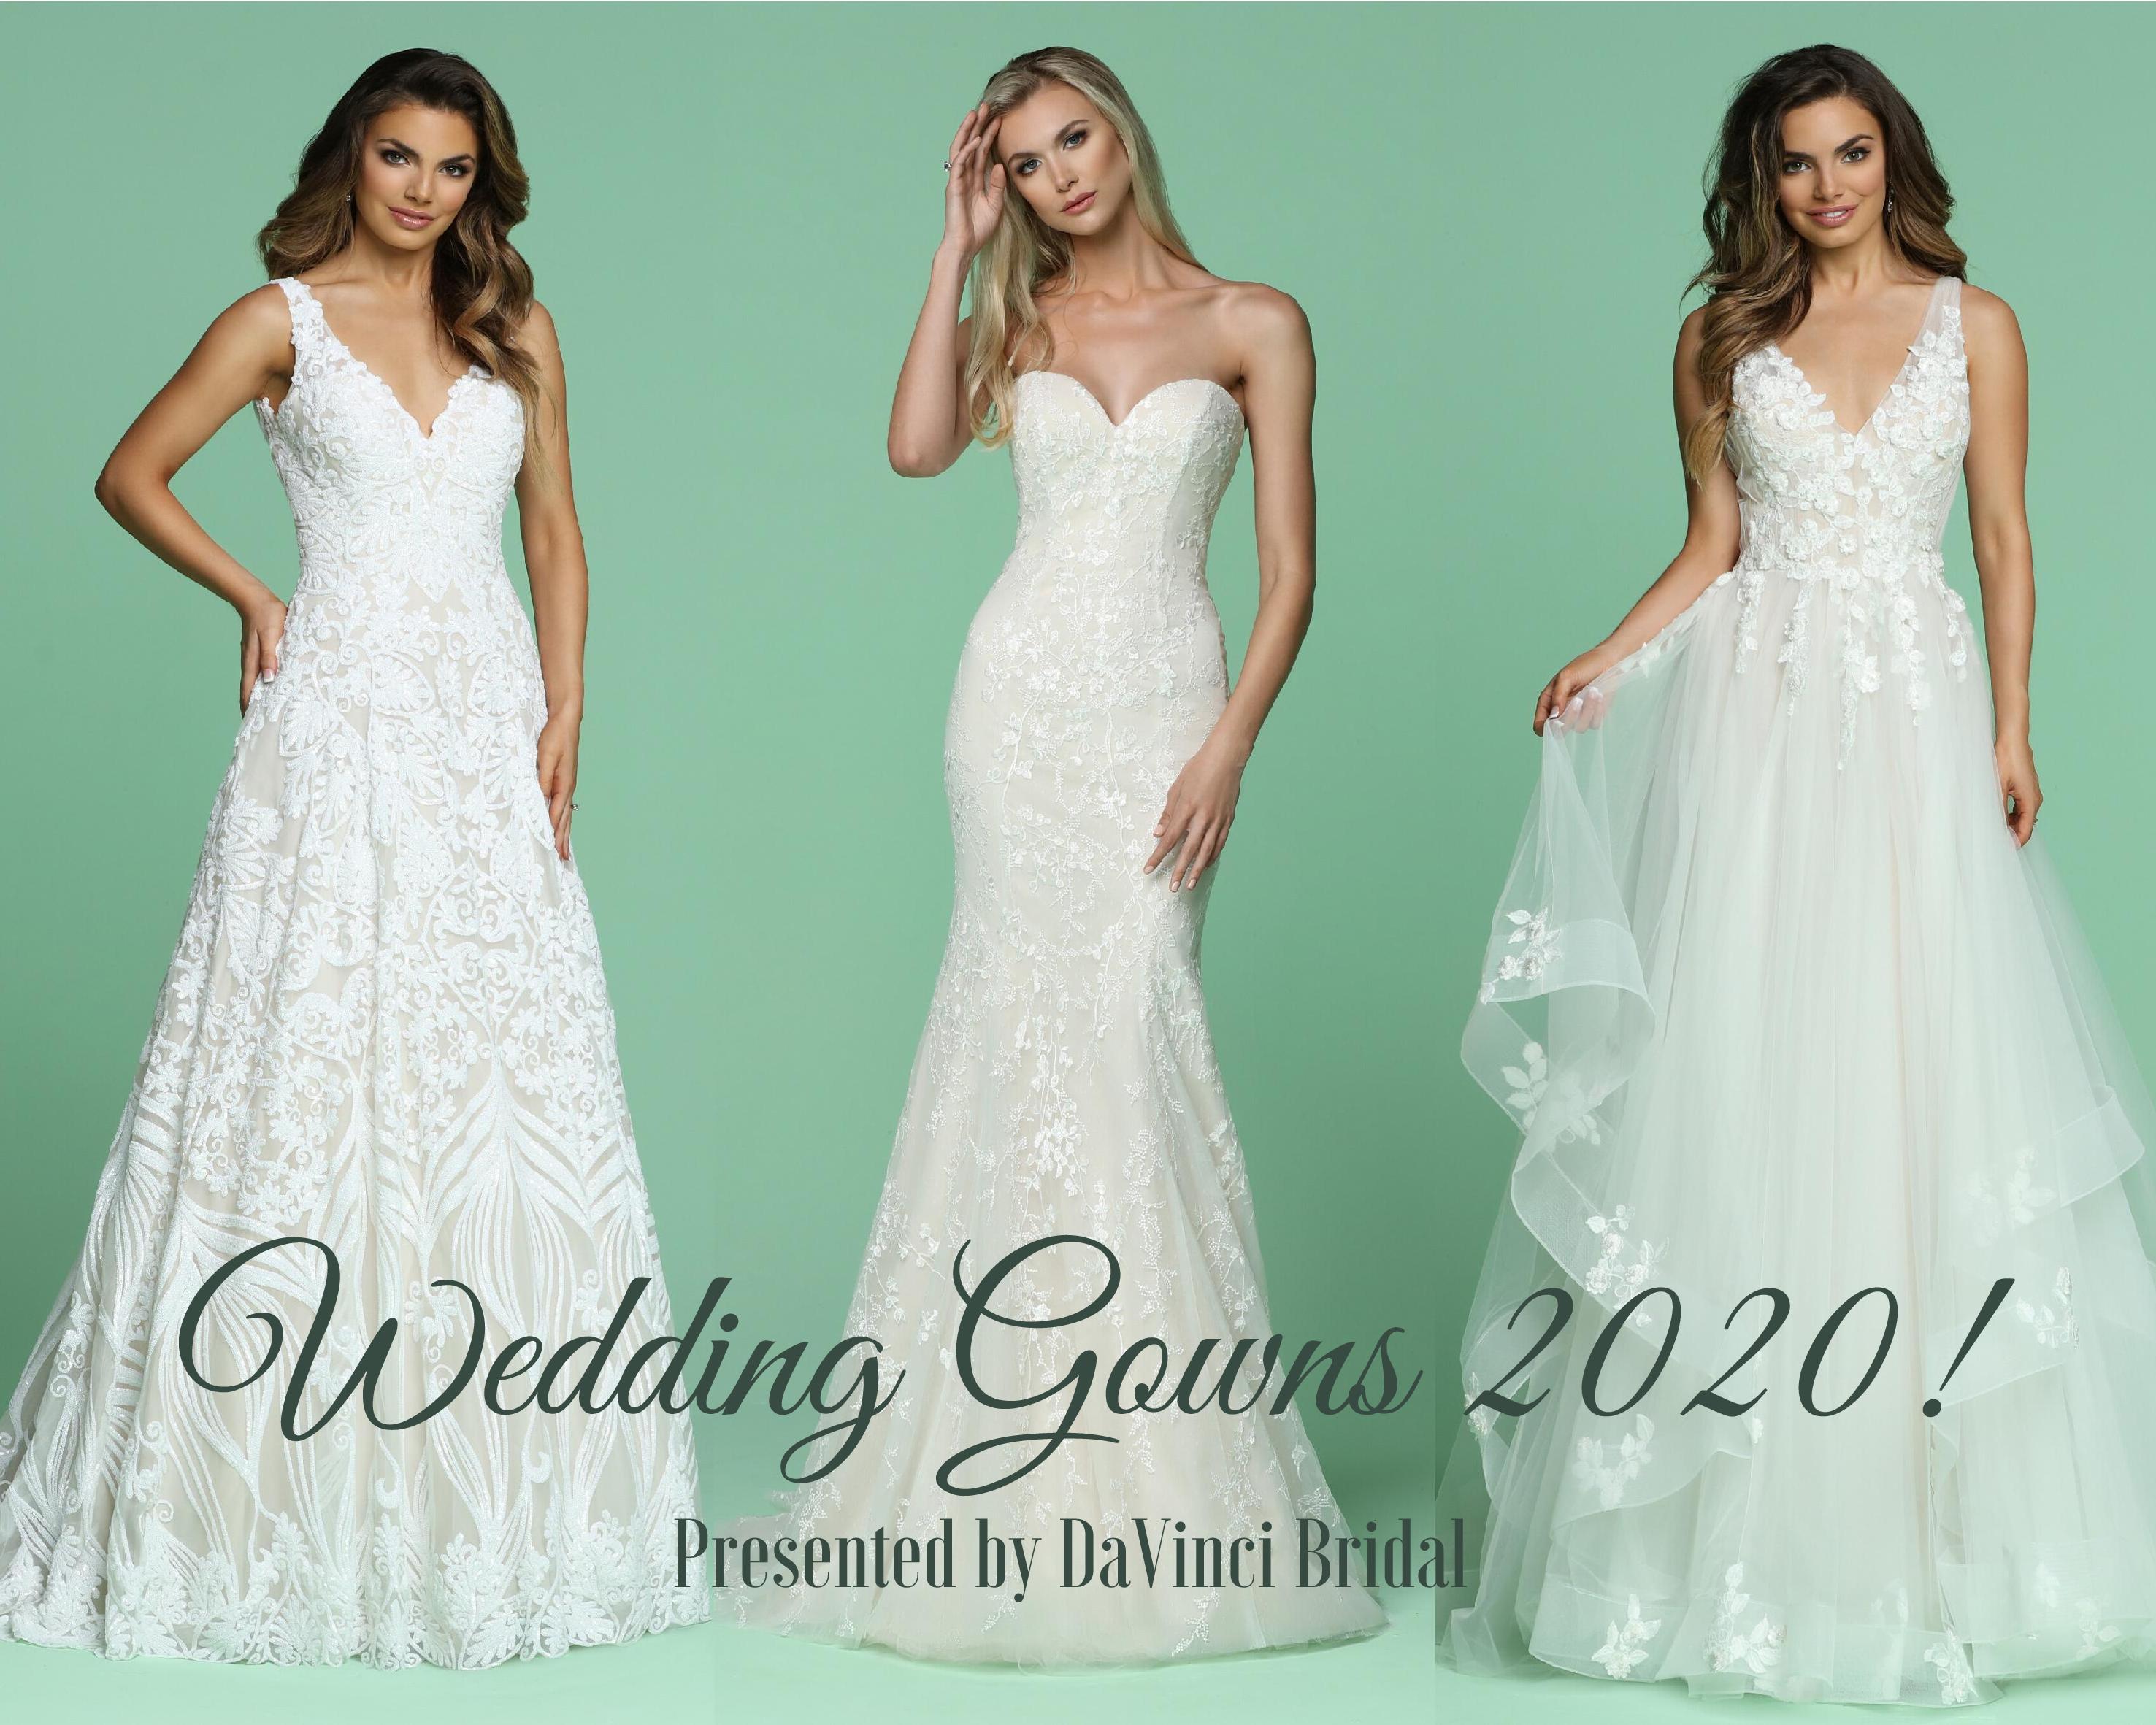 Meet Our New 2020 Wedding Dress Collection! | DaVinci Bridal